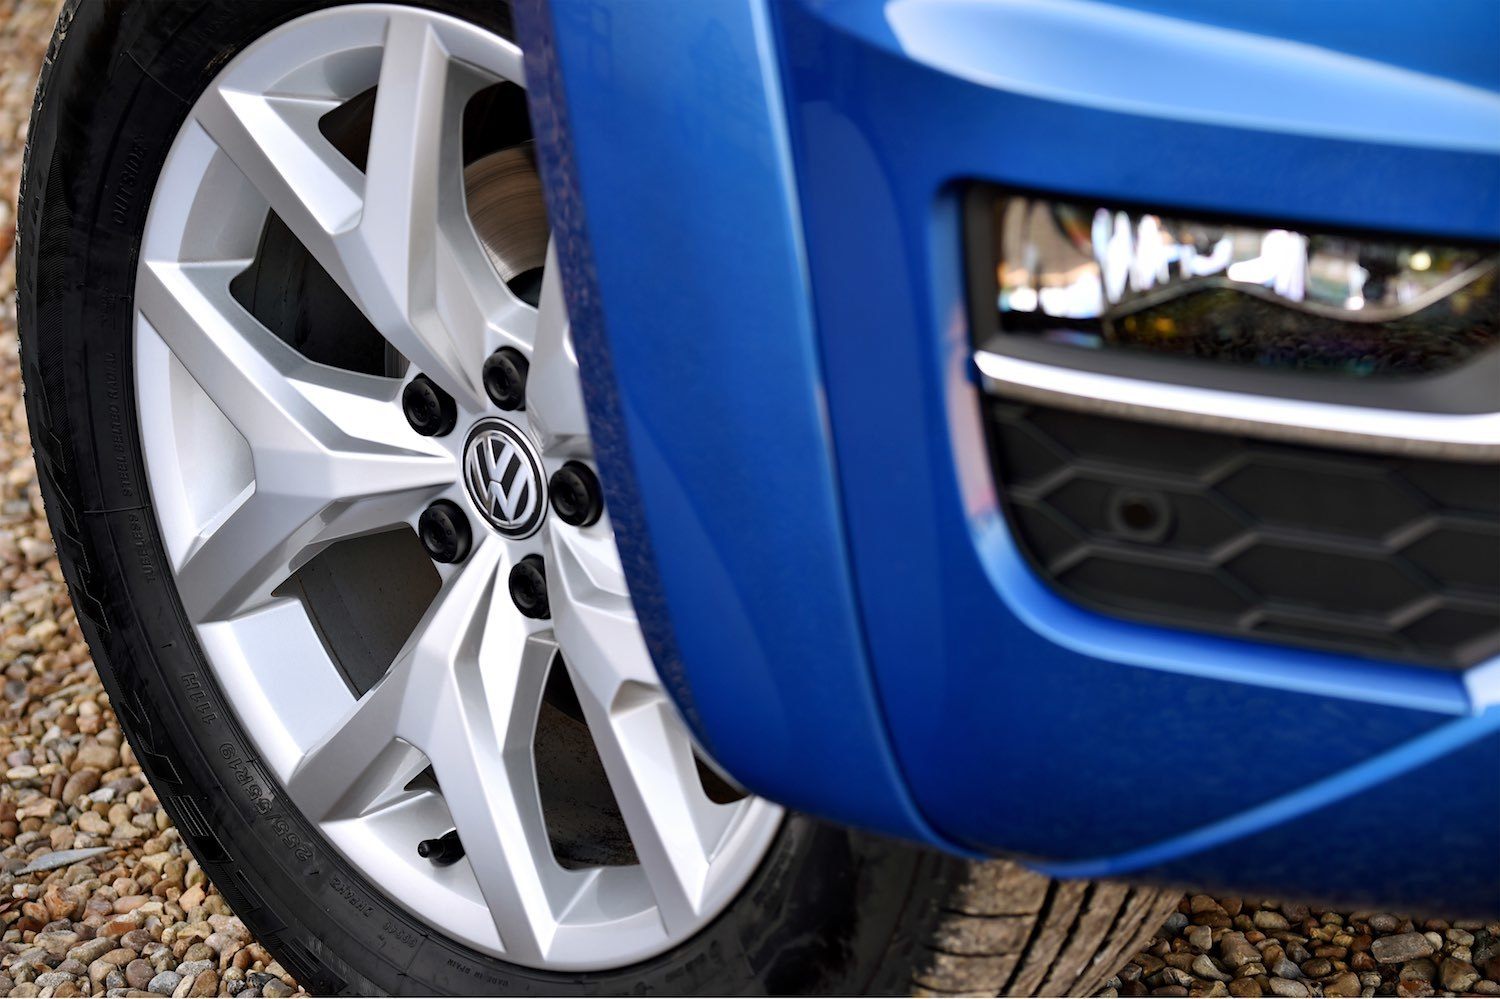 Neil Lyndon reviews the latest Volkswagen Amarok 12